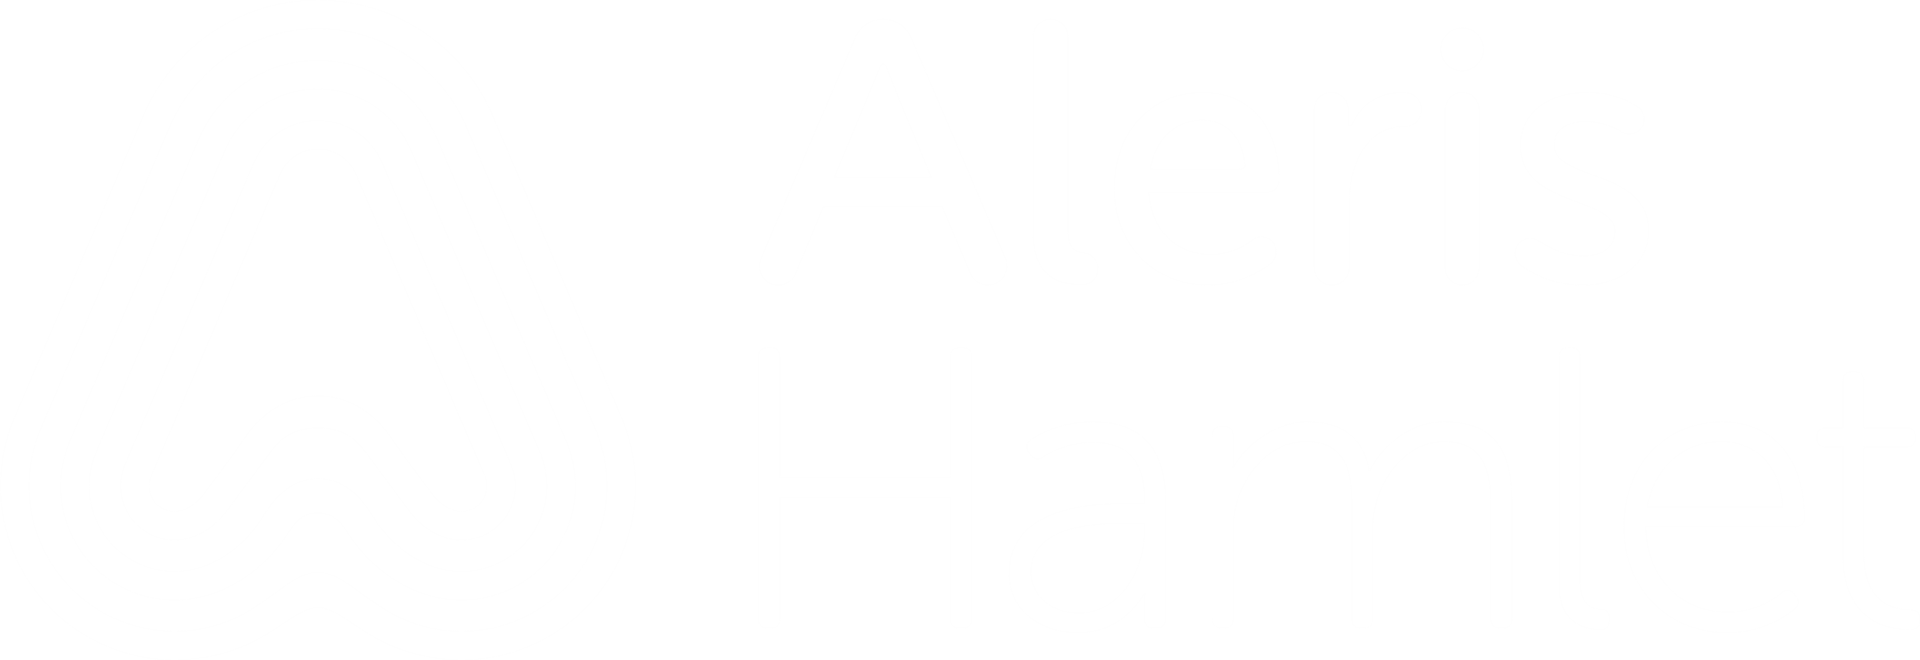 Aleris-Hamlet logo. Go to startpage.